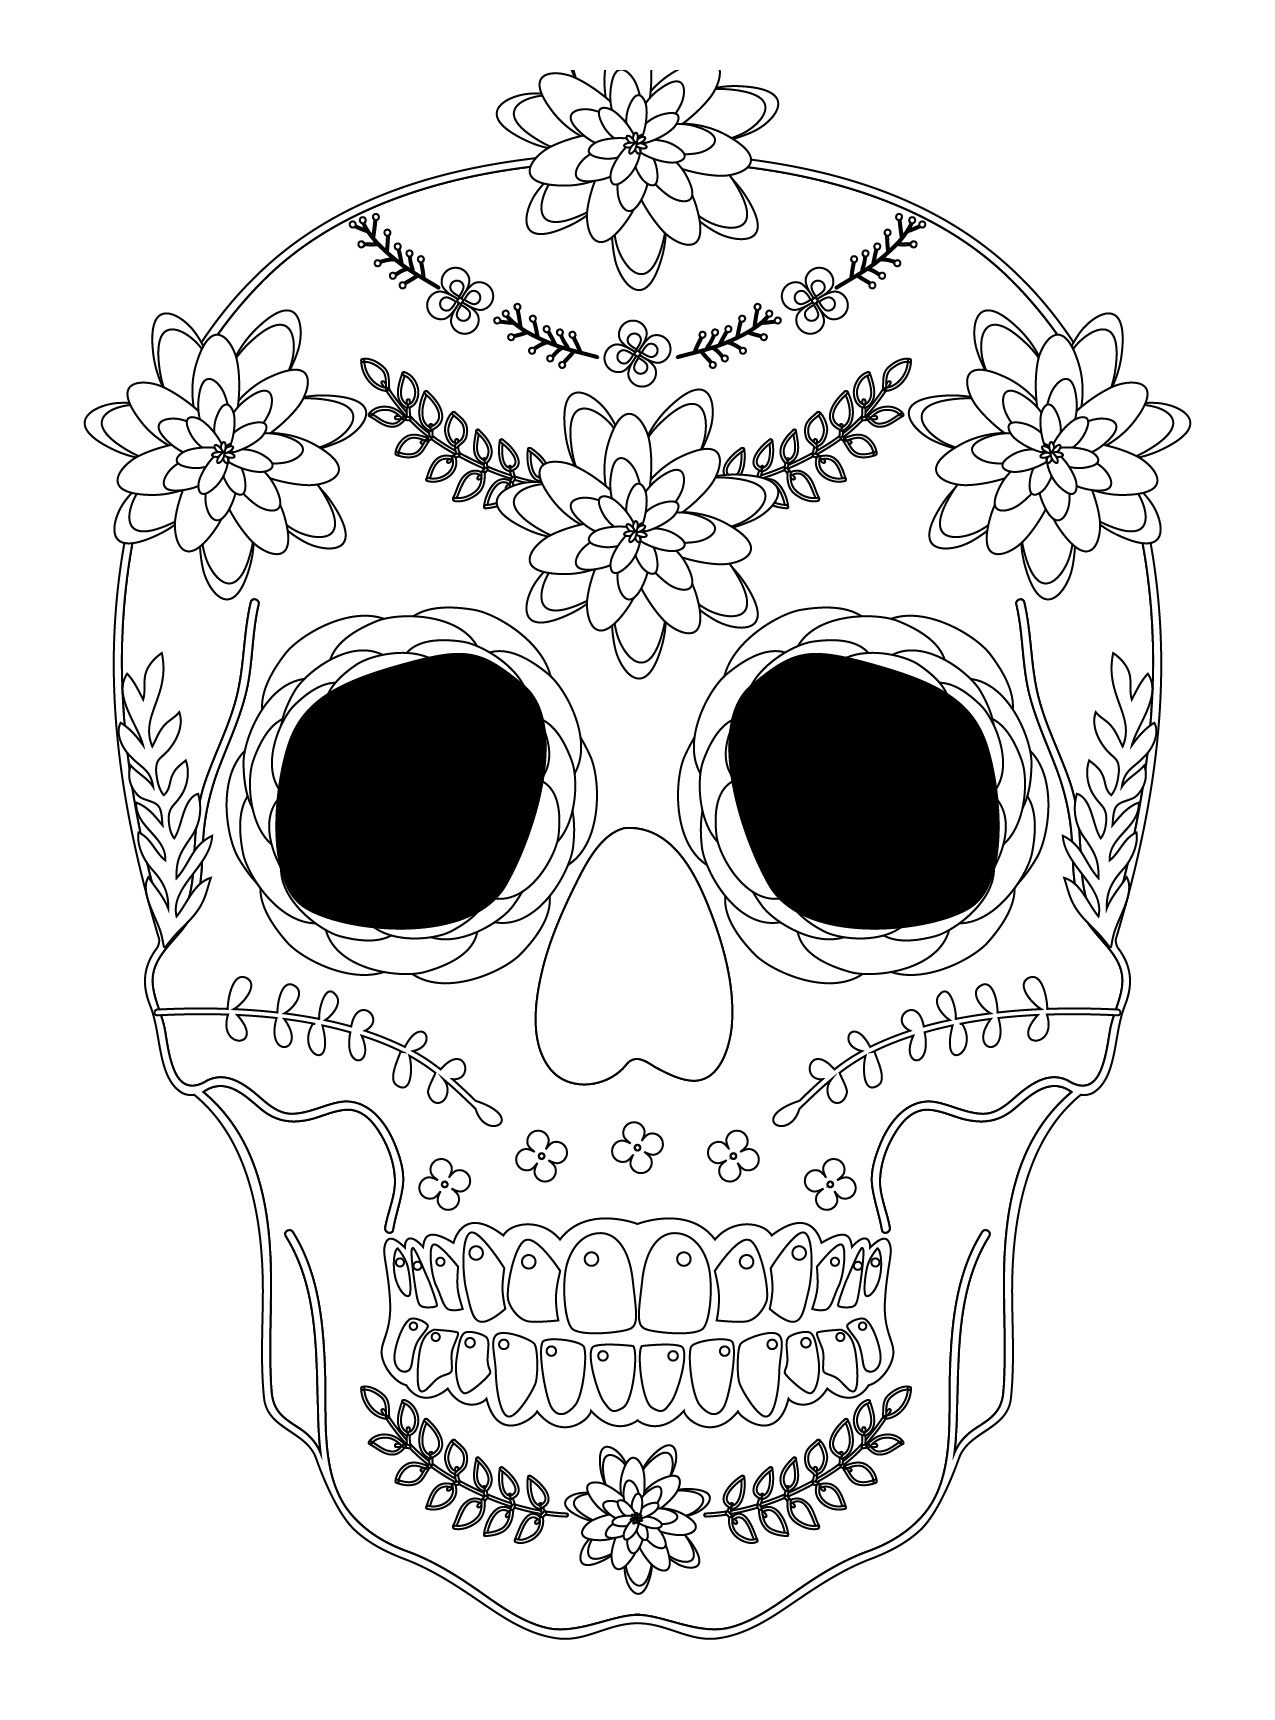 Dessin De Halloween Inspiration Sugar Skull Coloriage Halloween A Imprimer Qui Fait Peur